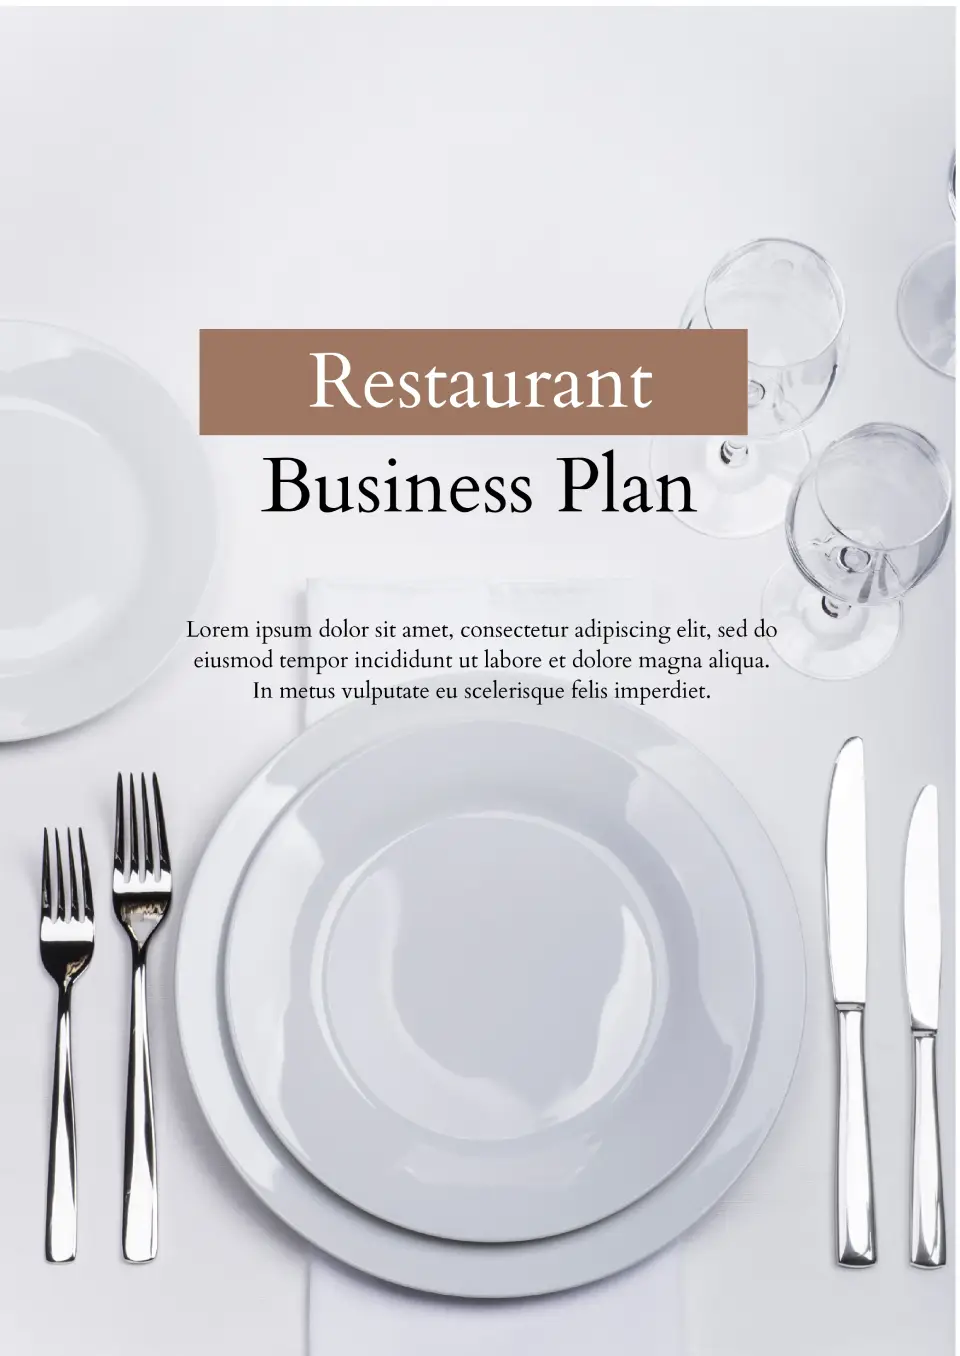 Restaurant Business Plan Template for Google Docs